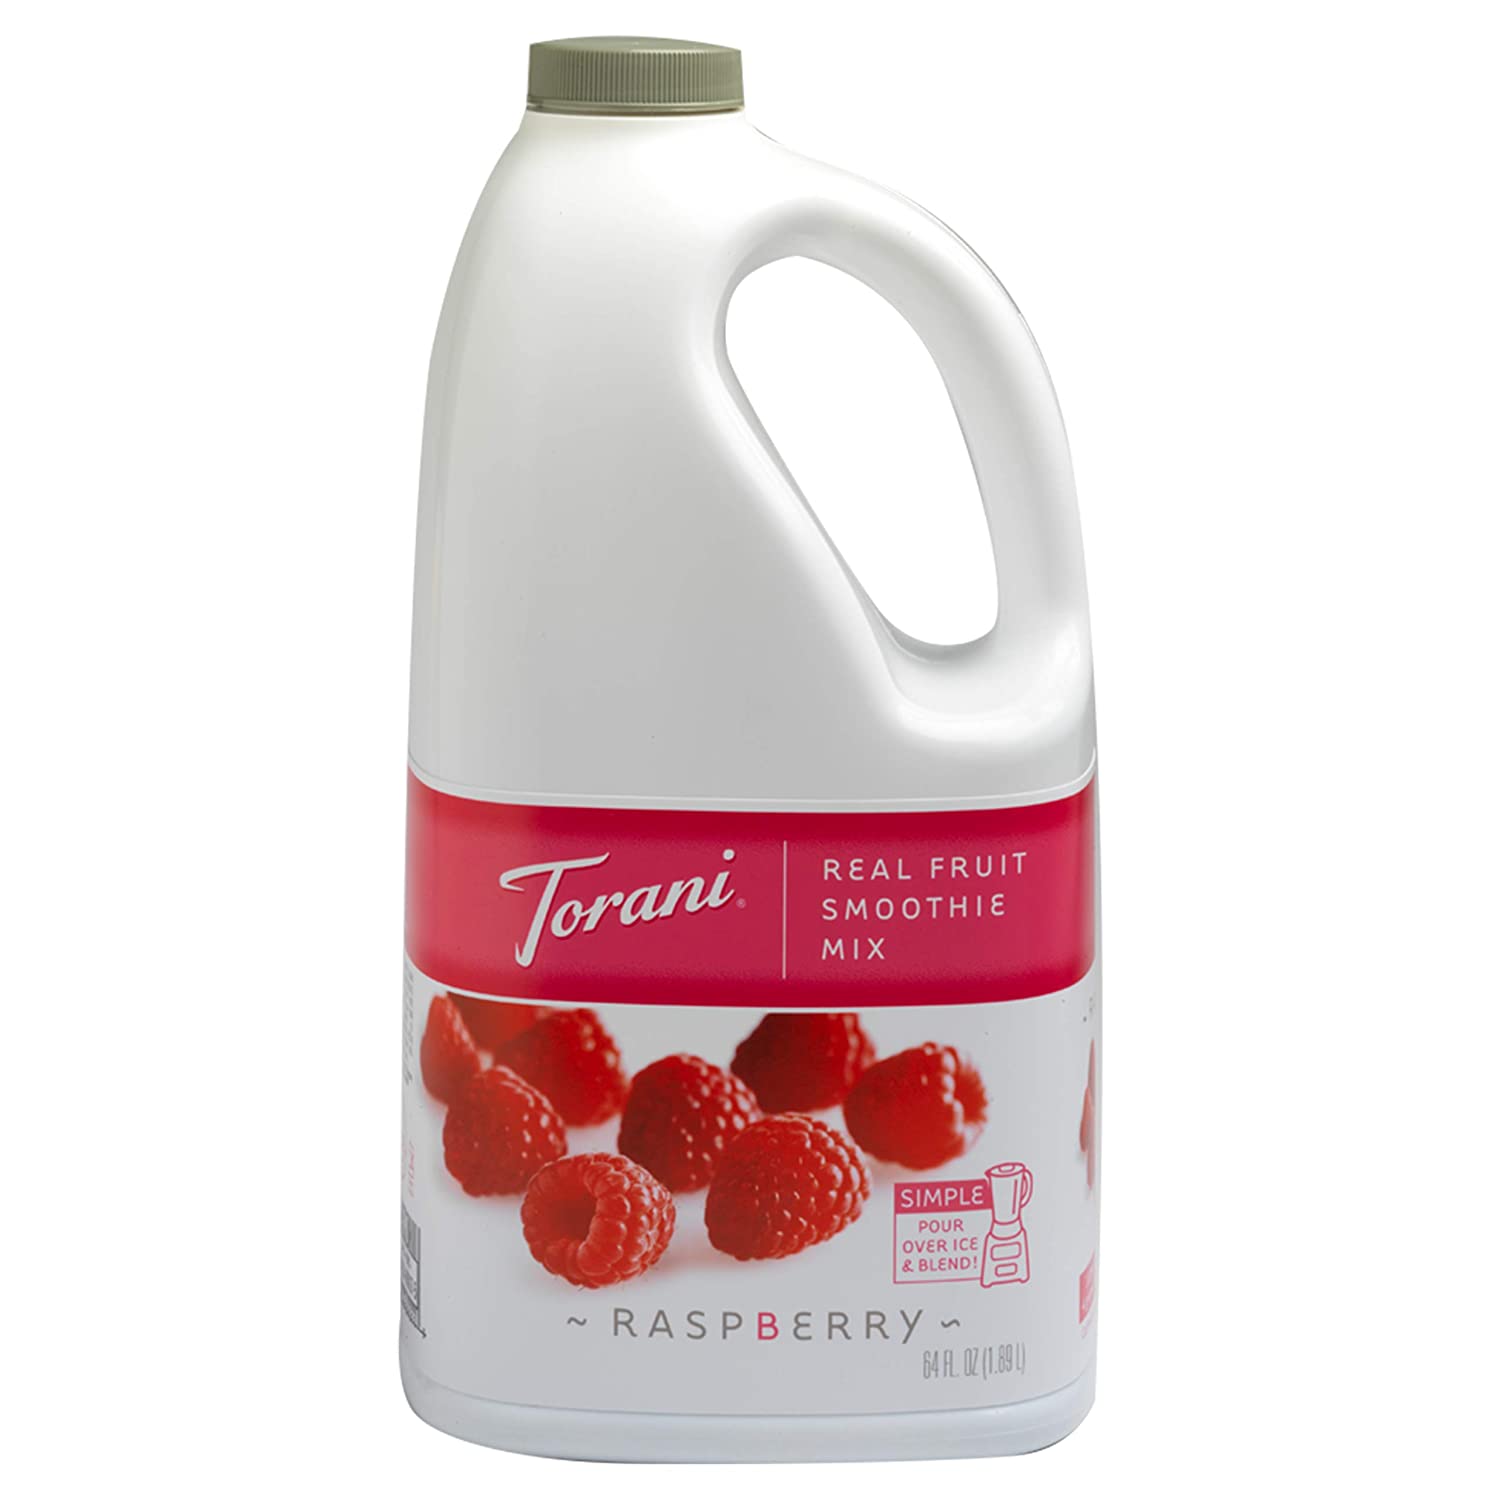 Torani Real Fruit Smoothies - 64oz Jug: Raspberry